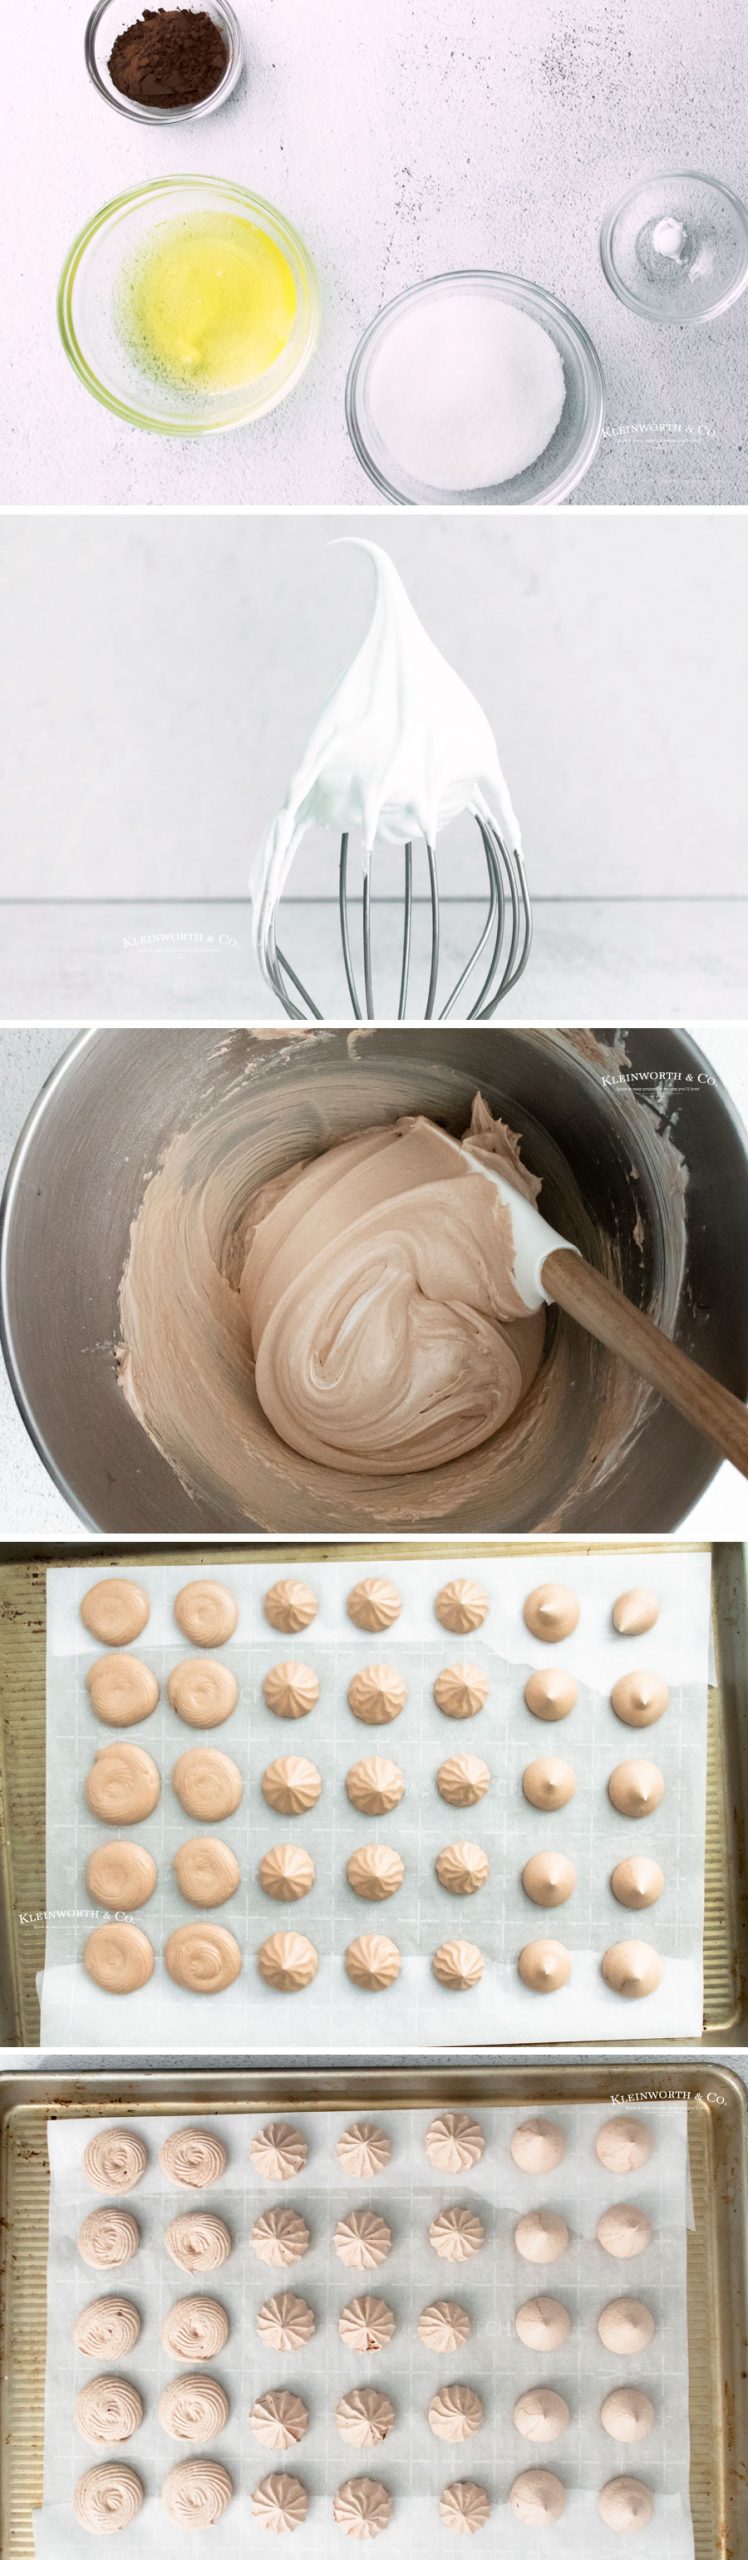 How to make chocolate meringues